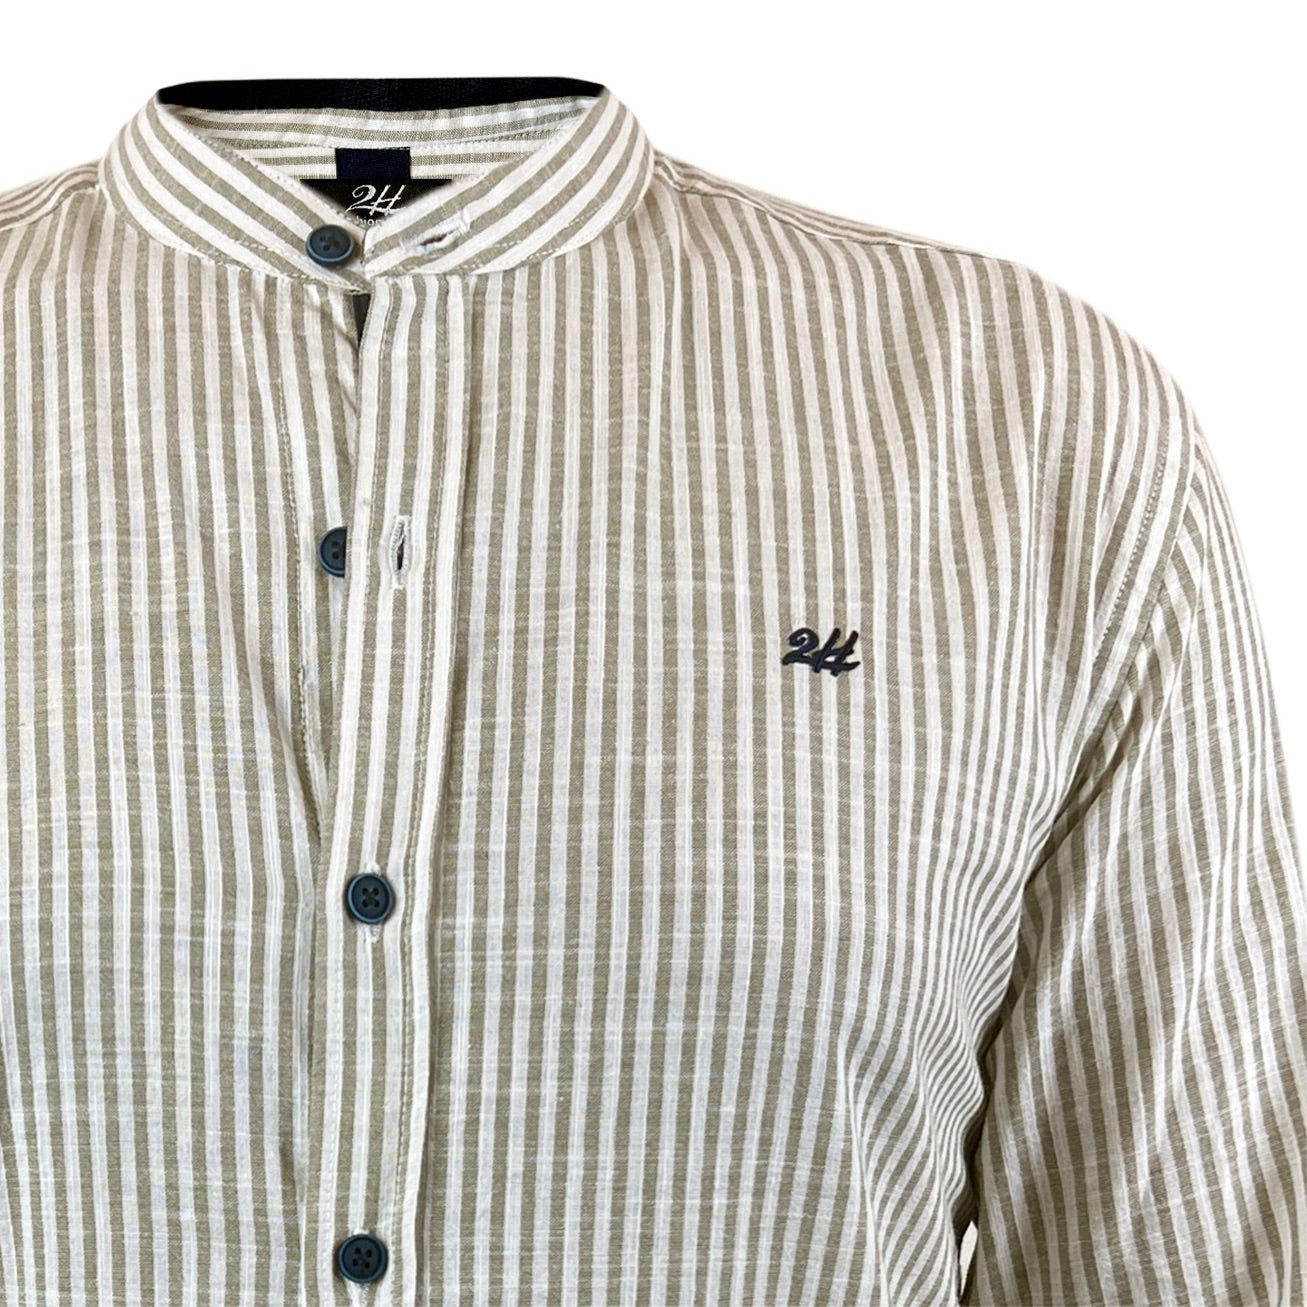 2H #1003 Olive Green Striped Linen Shirt